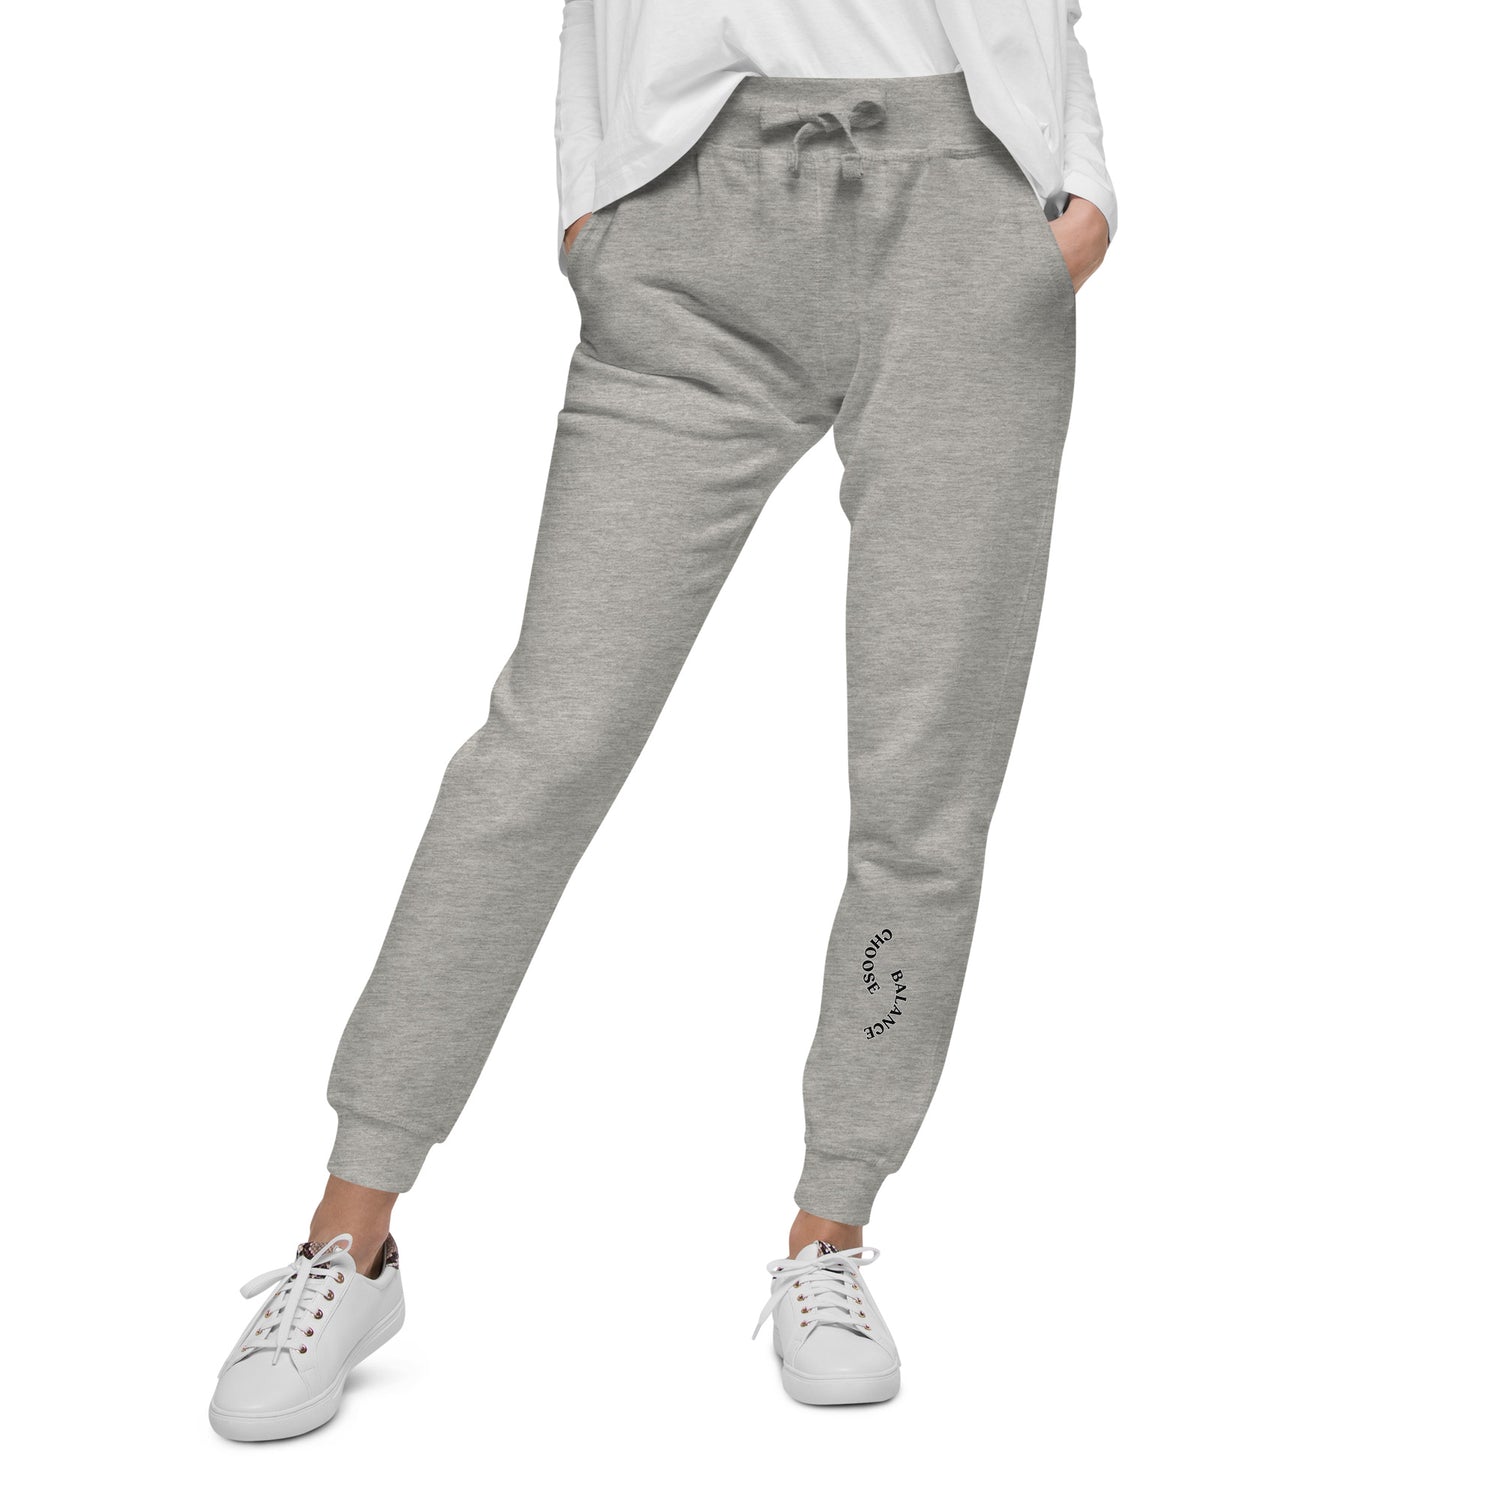 Closeup of Grey Sweat pant with "Choose Balance" printed on left lower leg.